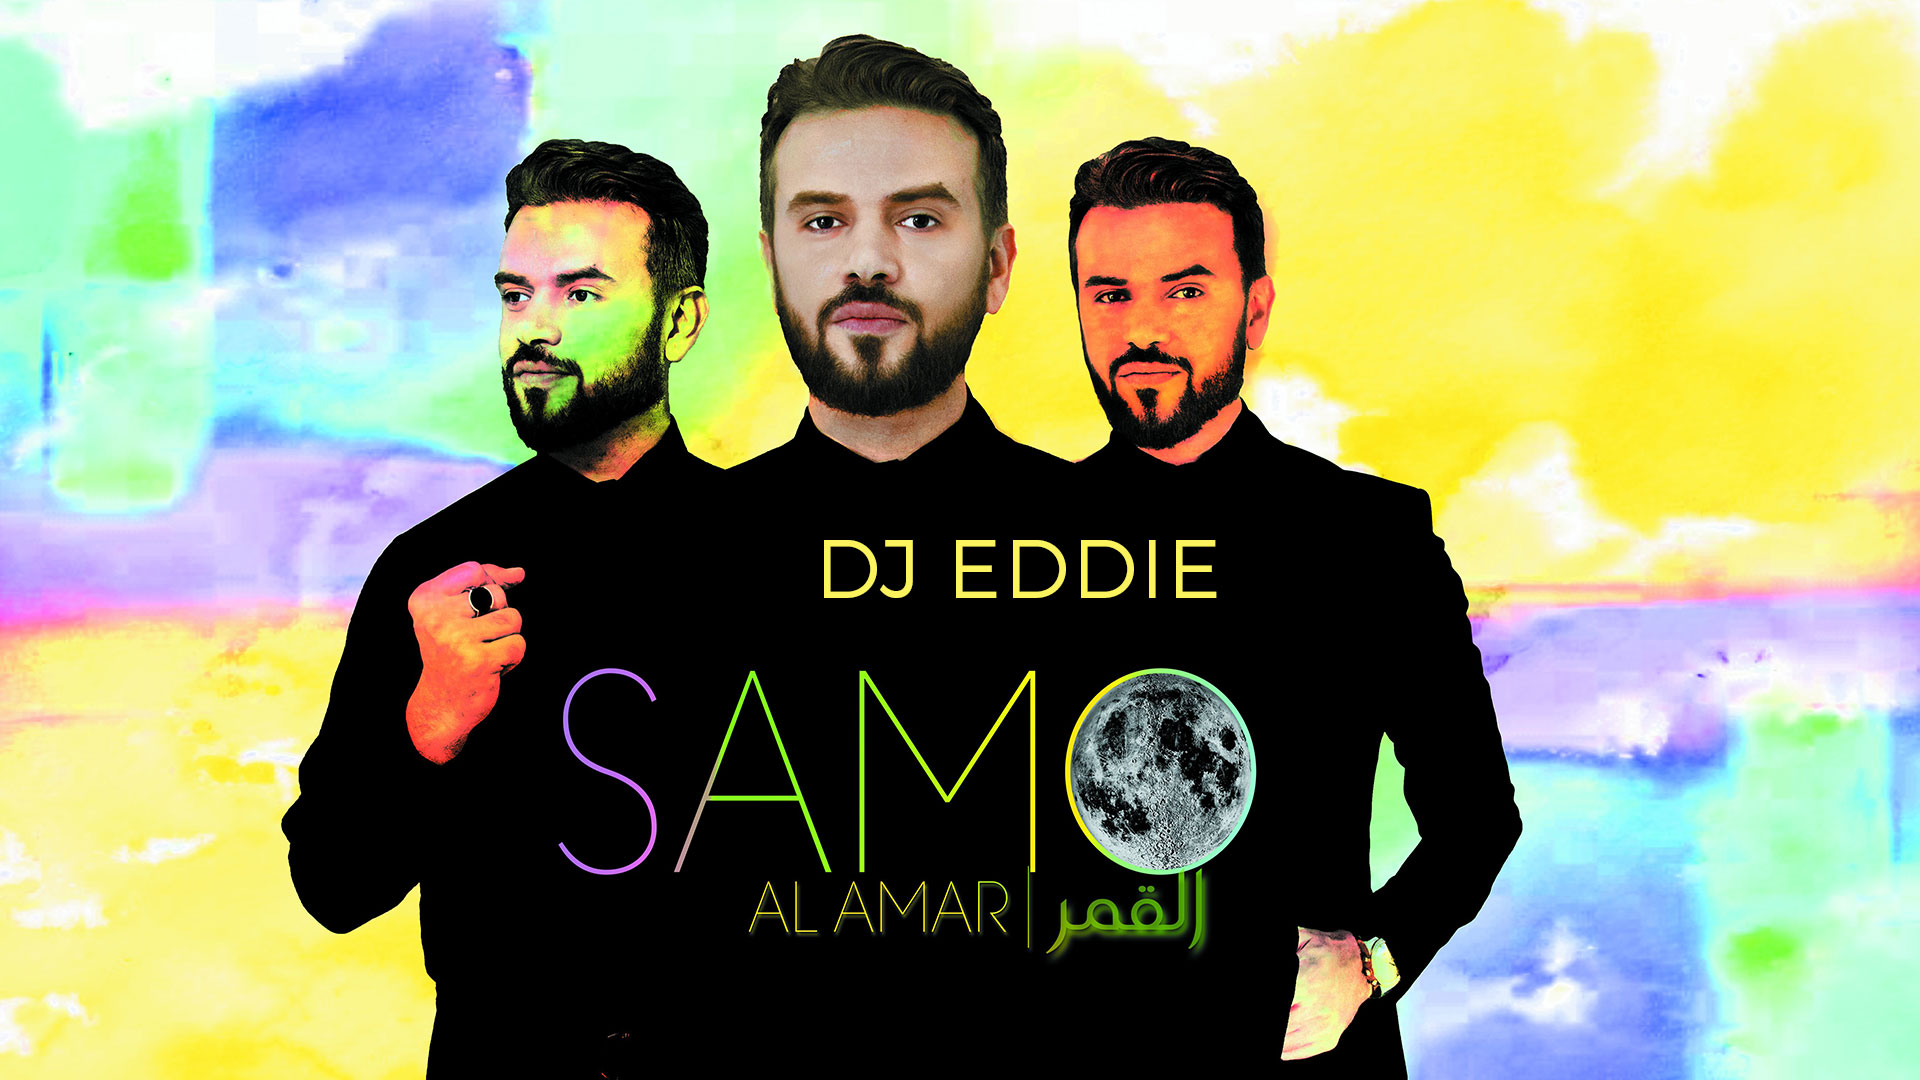 El Amar - Samo Zaen القمر - ساموزين